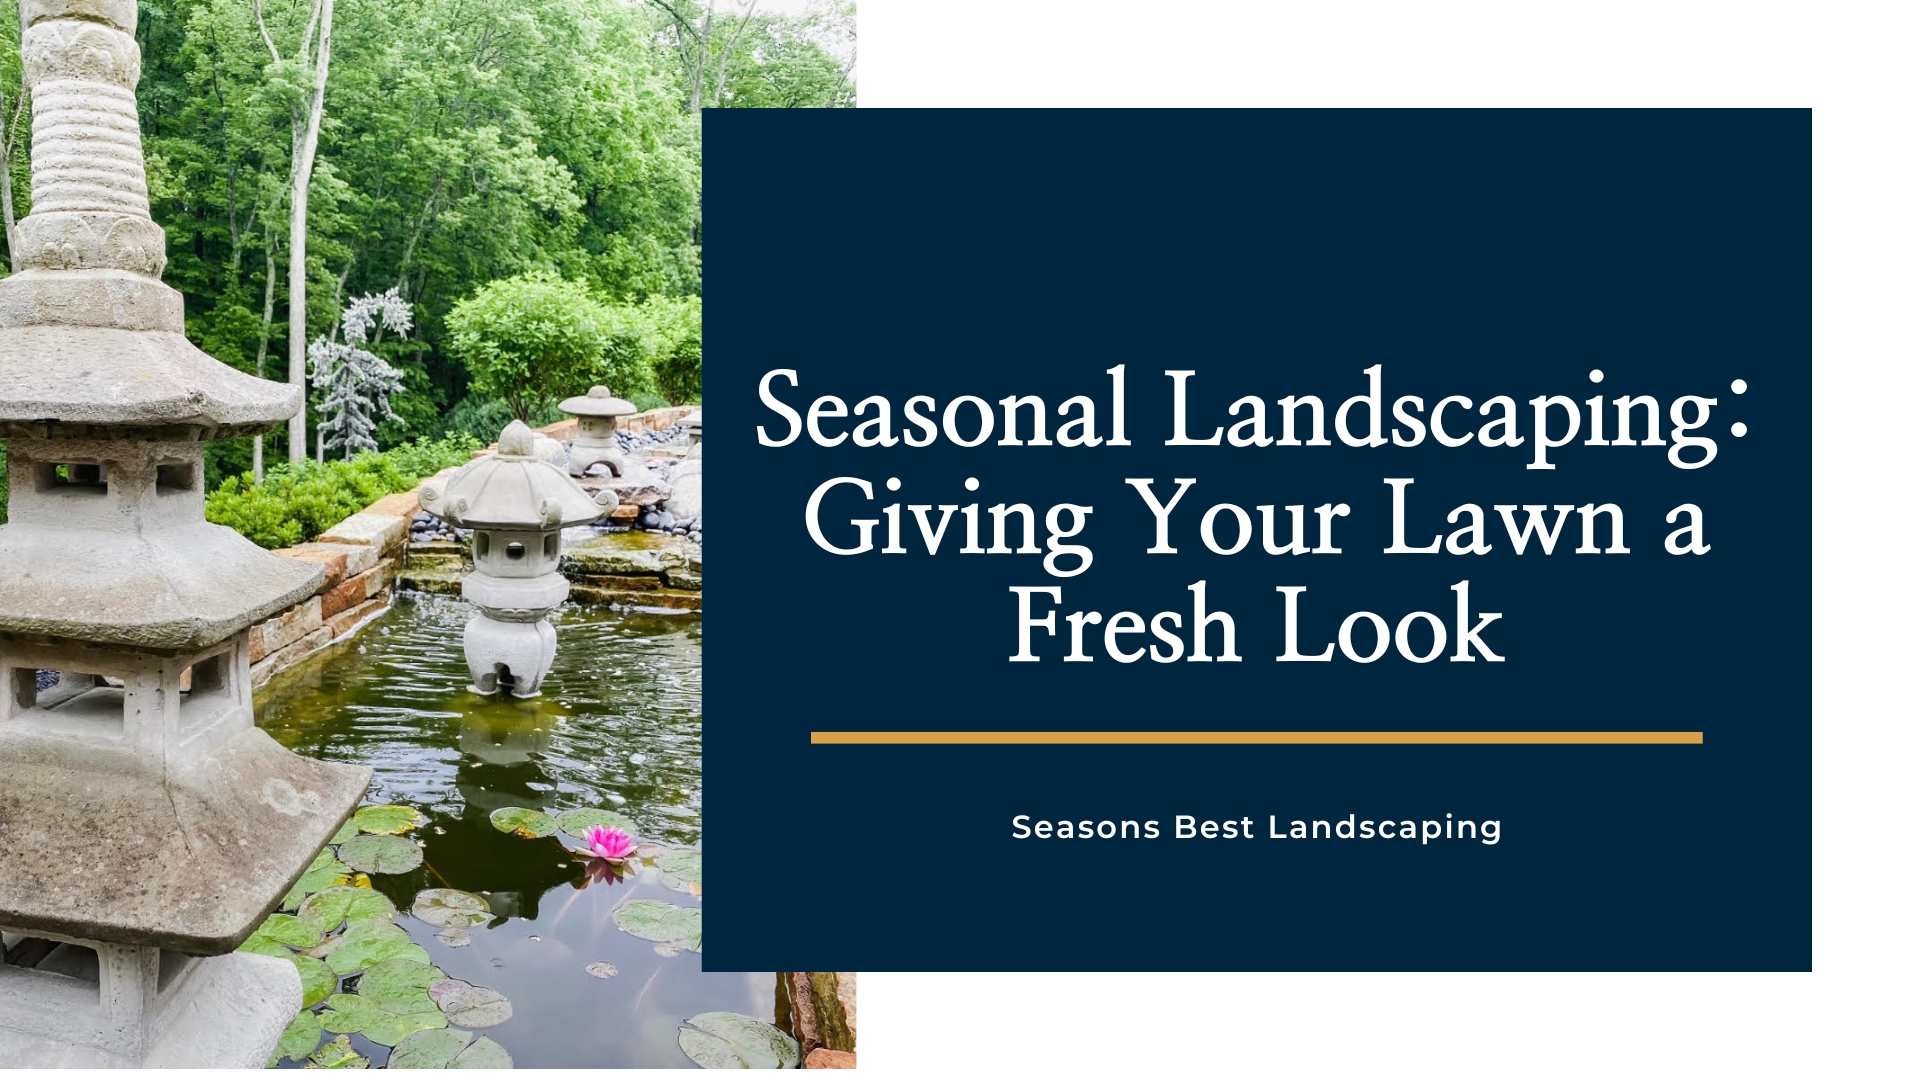 Season to Season Landscaping - Seasons Best Landscaping